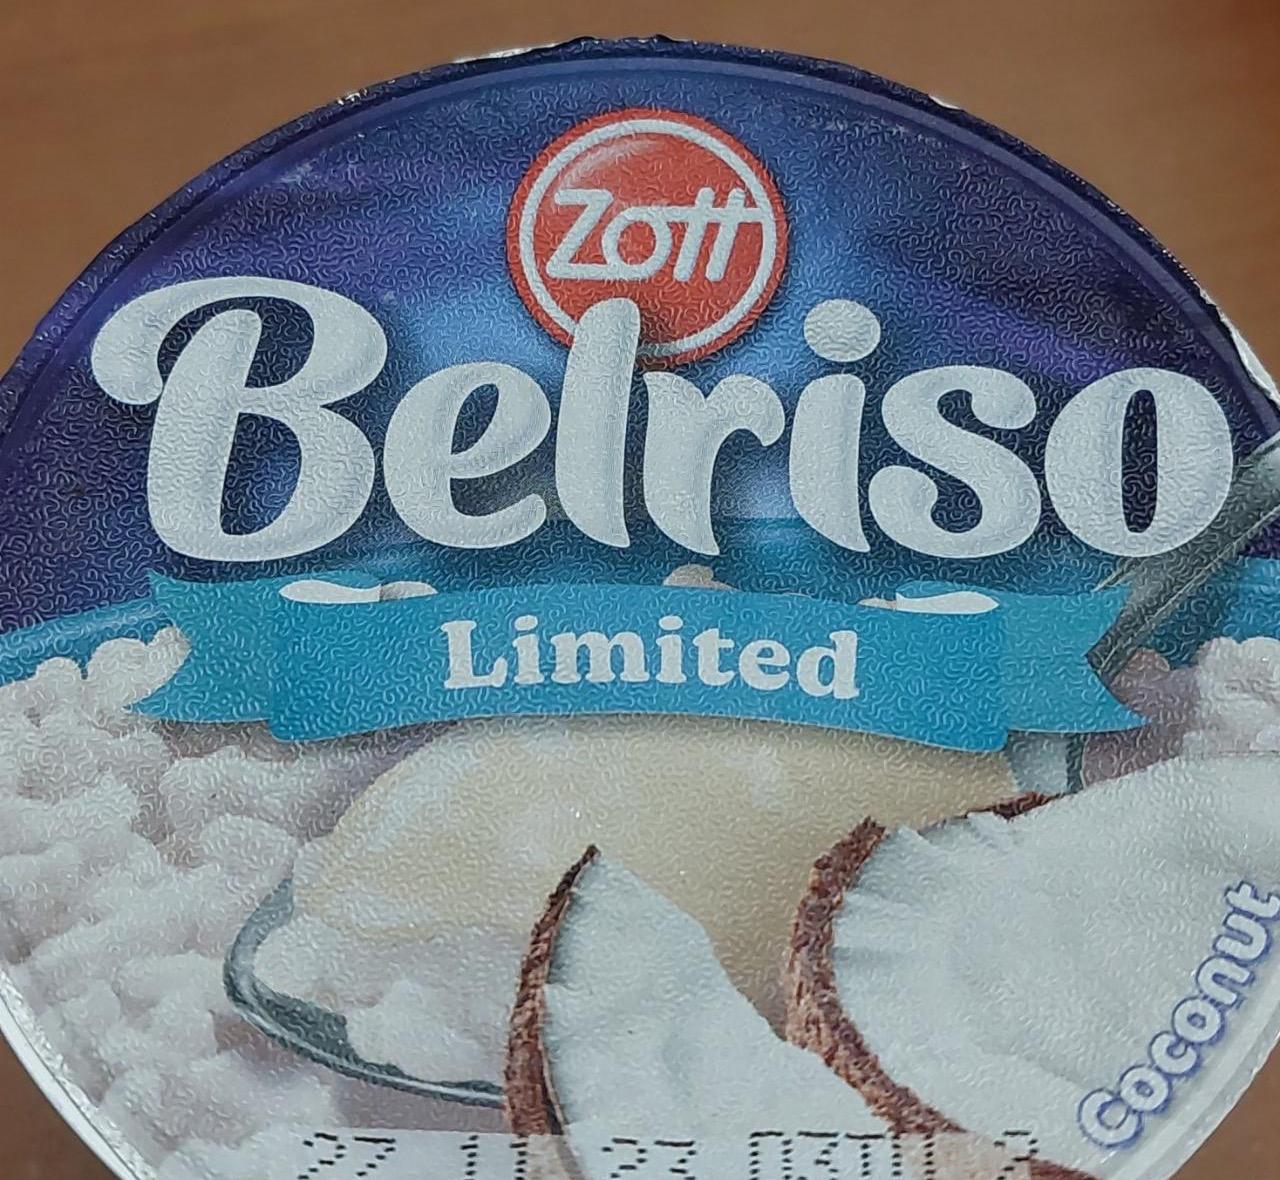 Képek - Belriso Limited kókuszos Zott